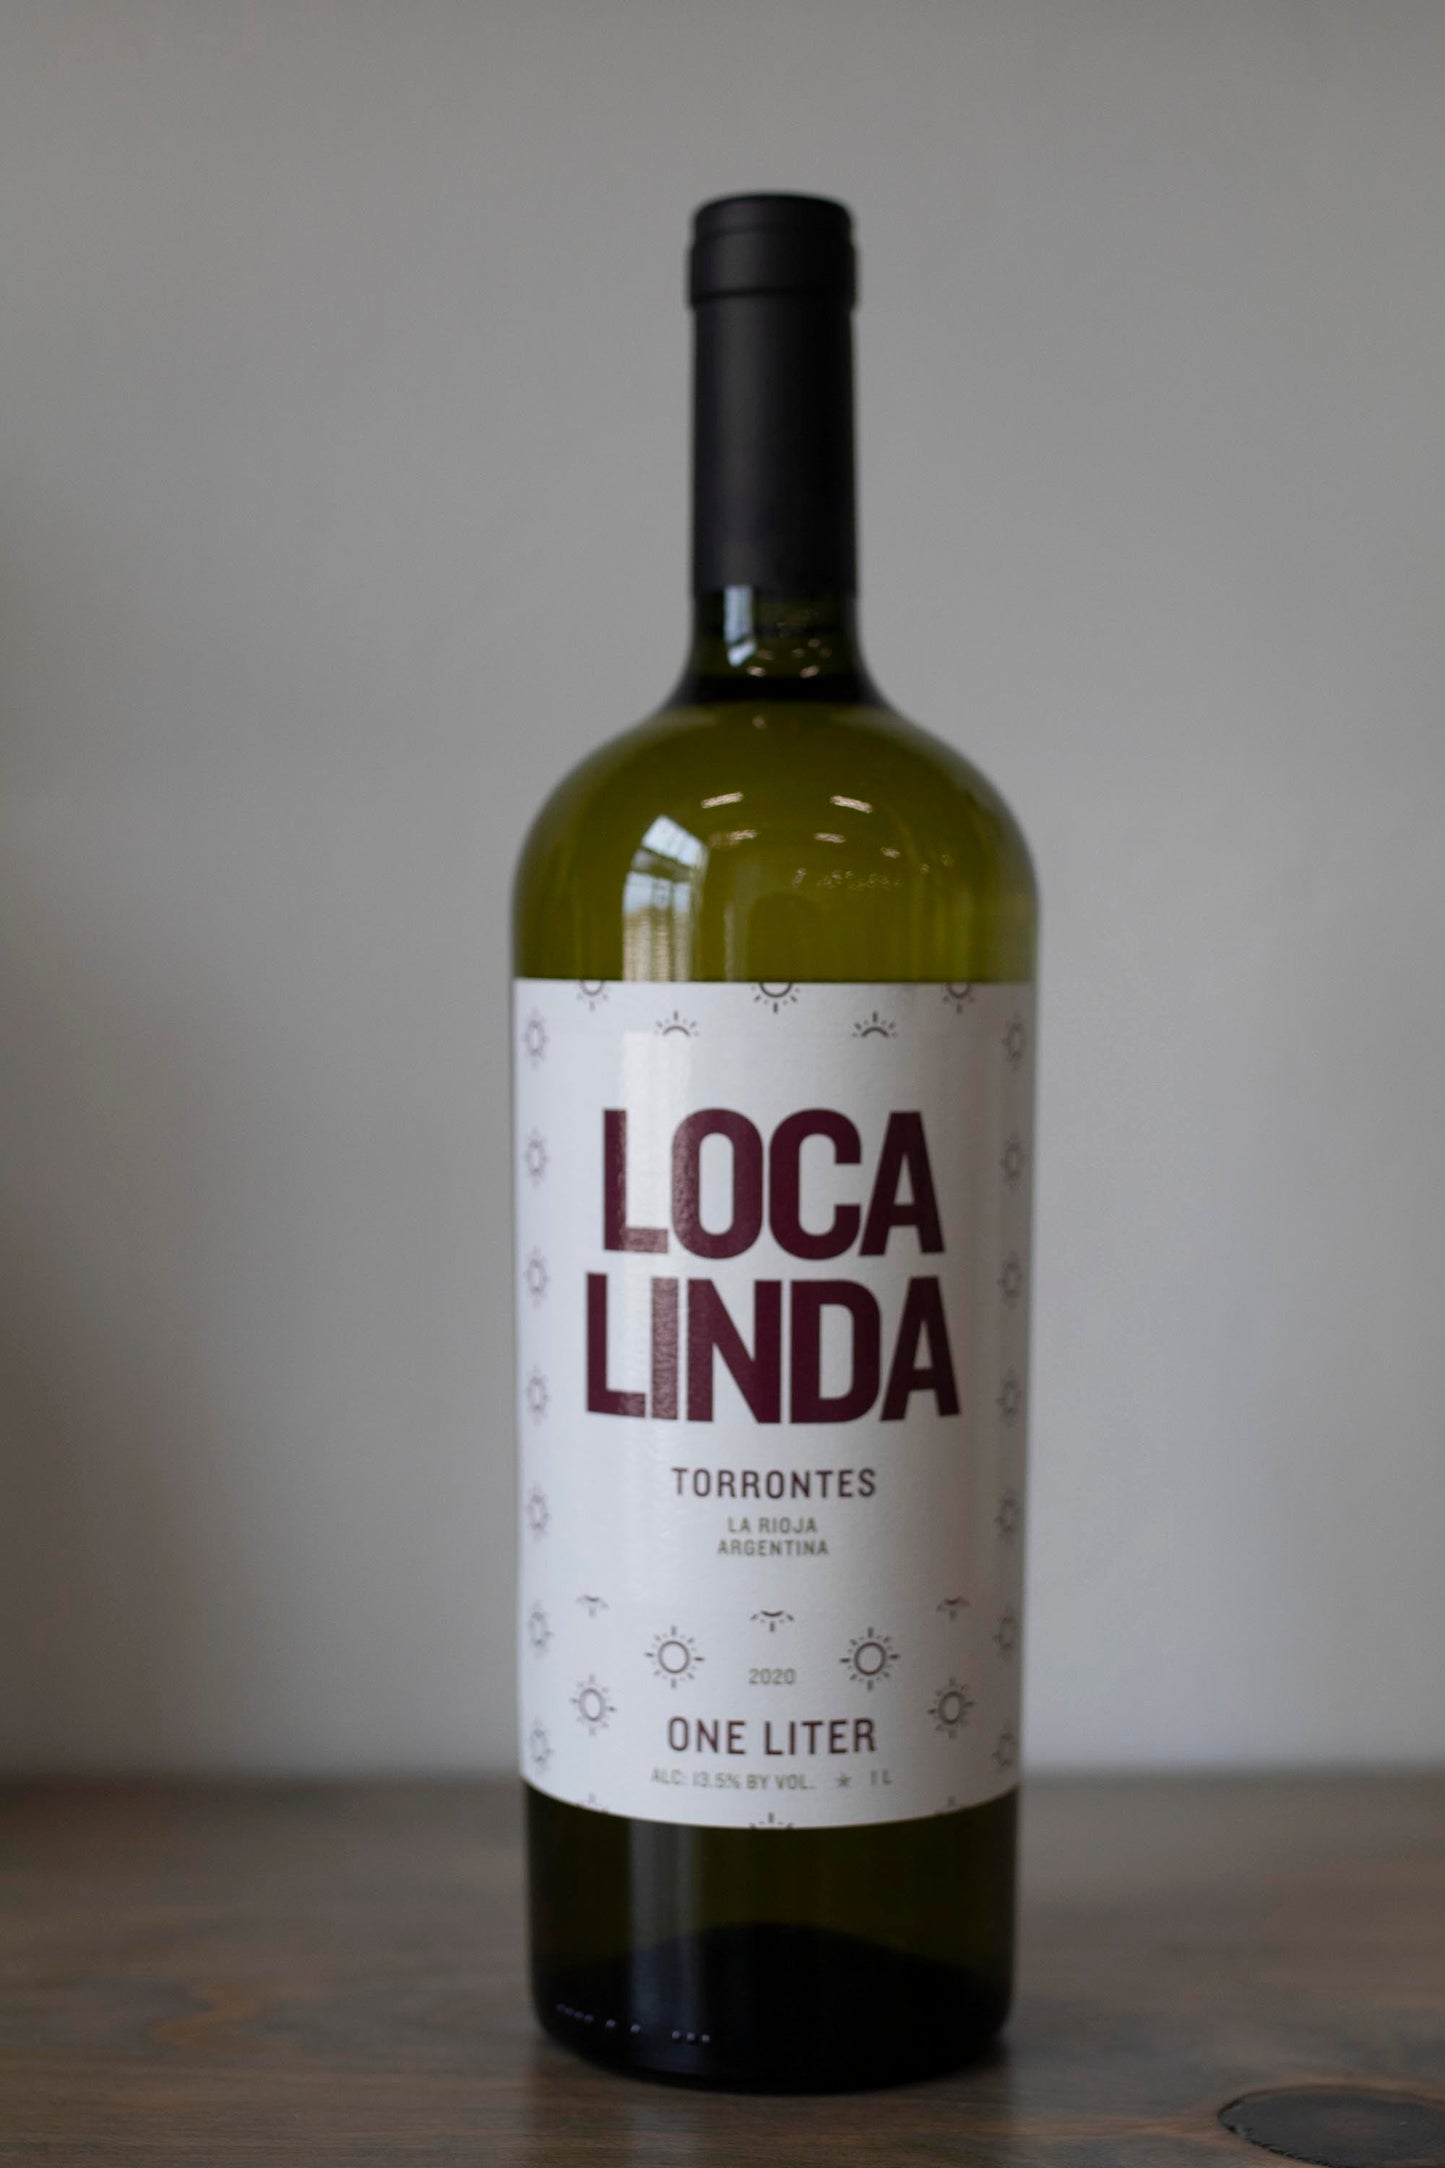 Bottle of Loca Linda Torrontes found at Vine & Board in 3809 NW 166th St Suite 1, Edmond, OK 73012